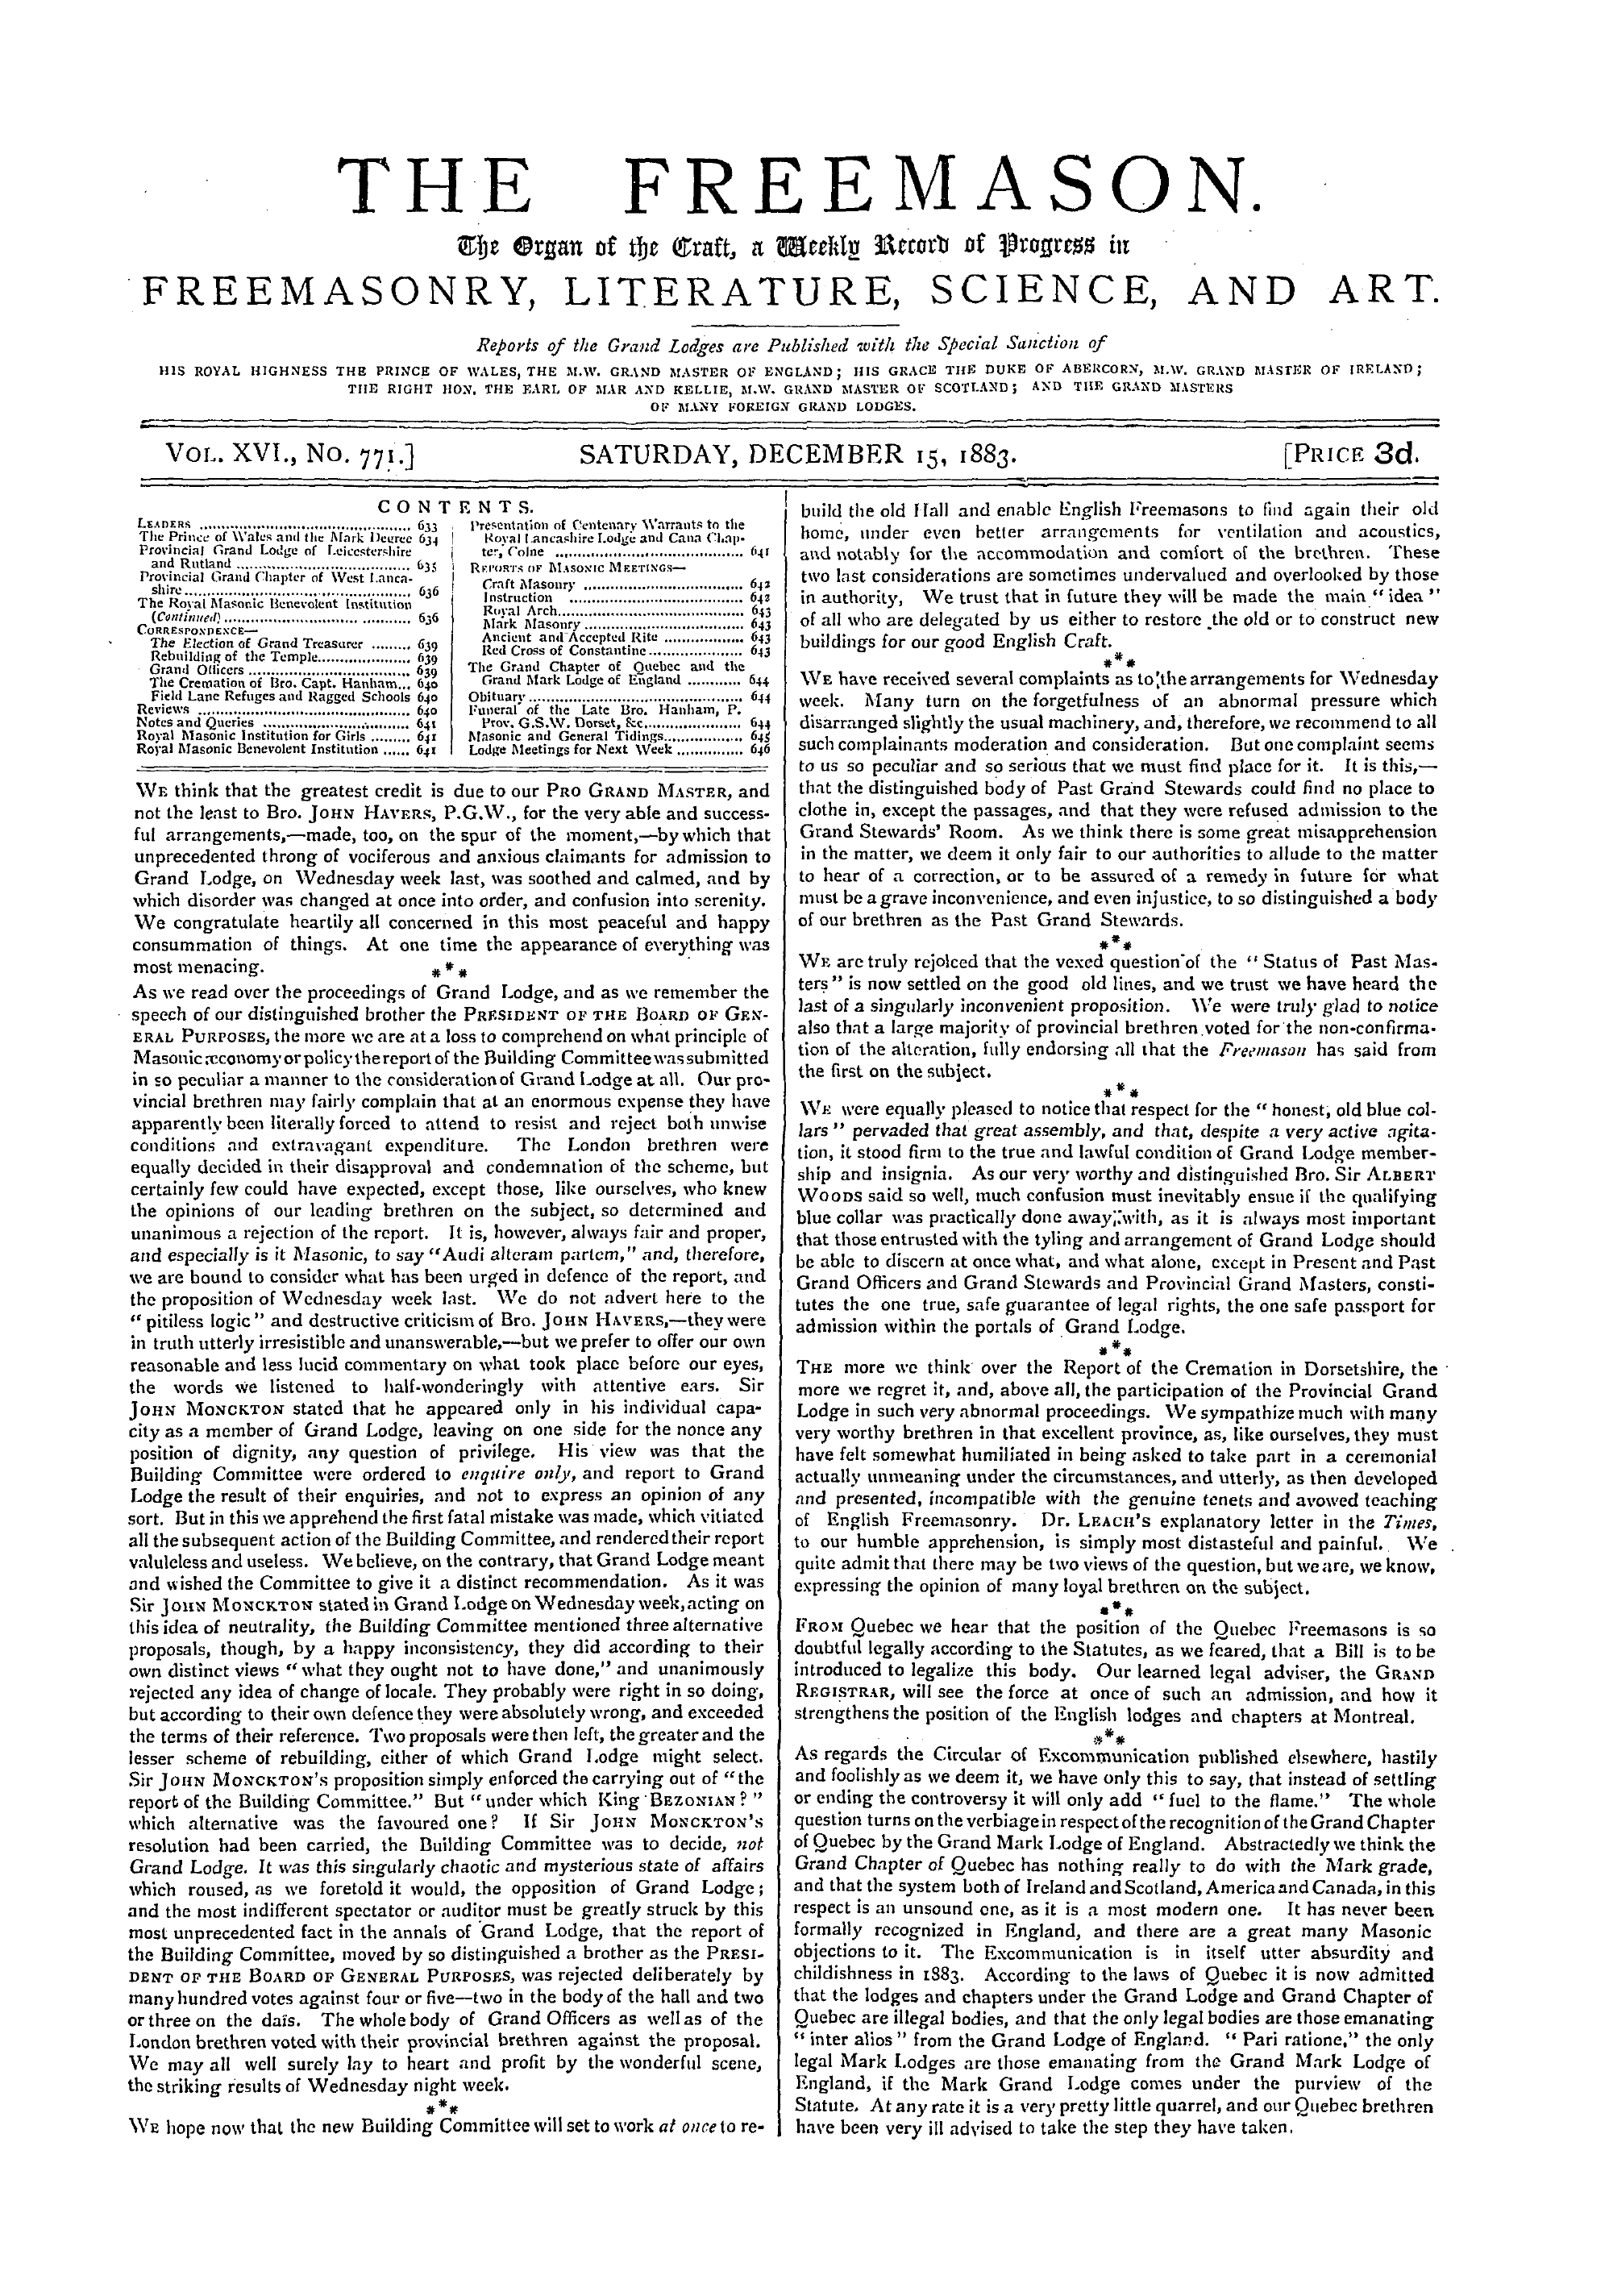 The Freemason: 1883-12-15: 1